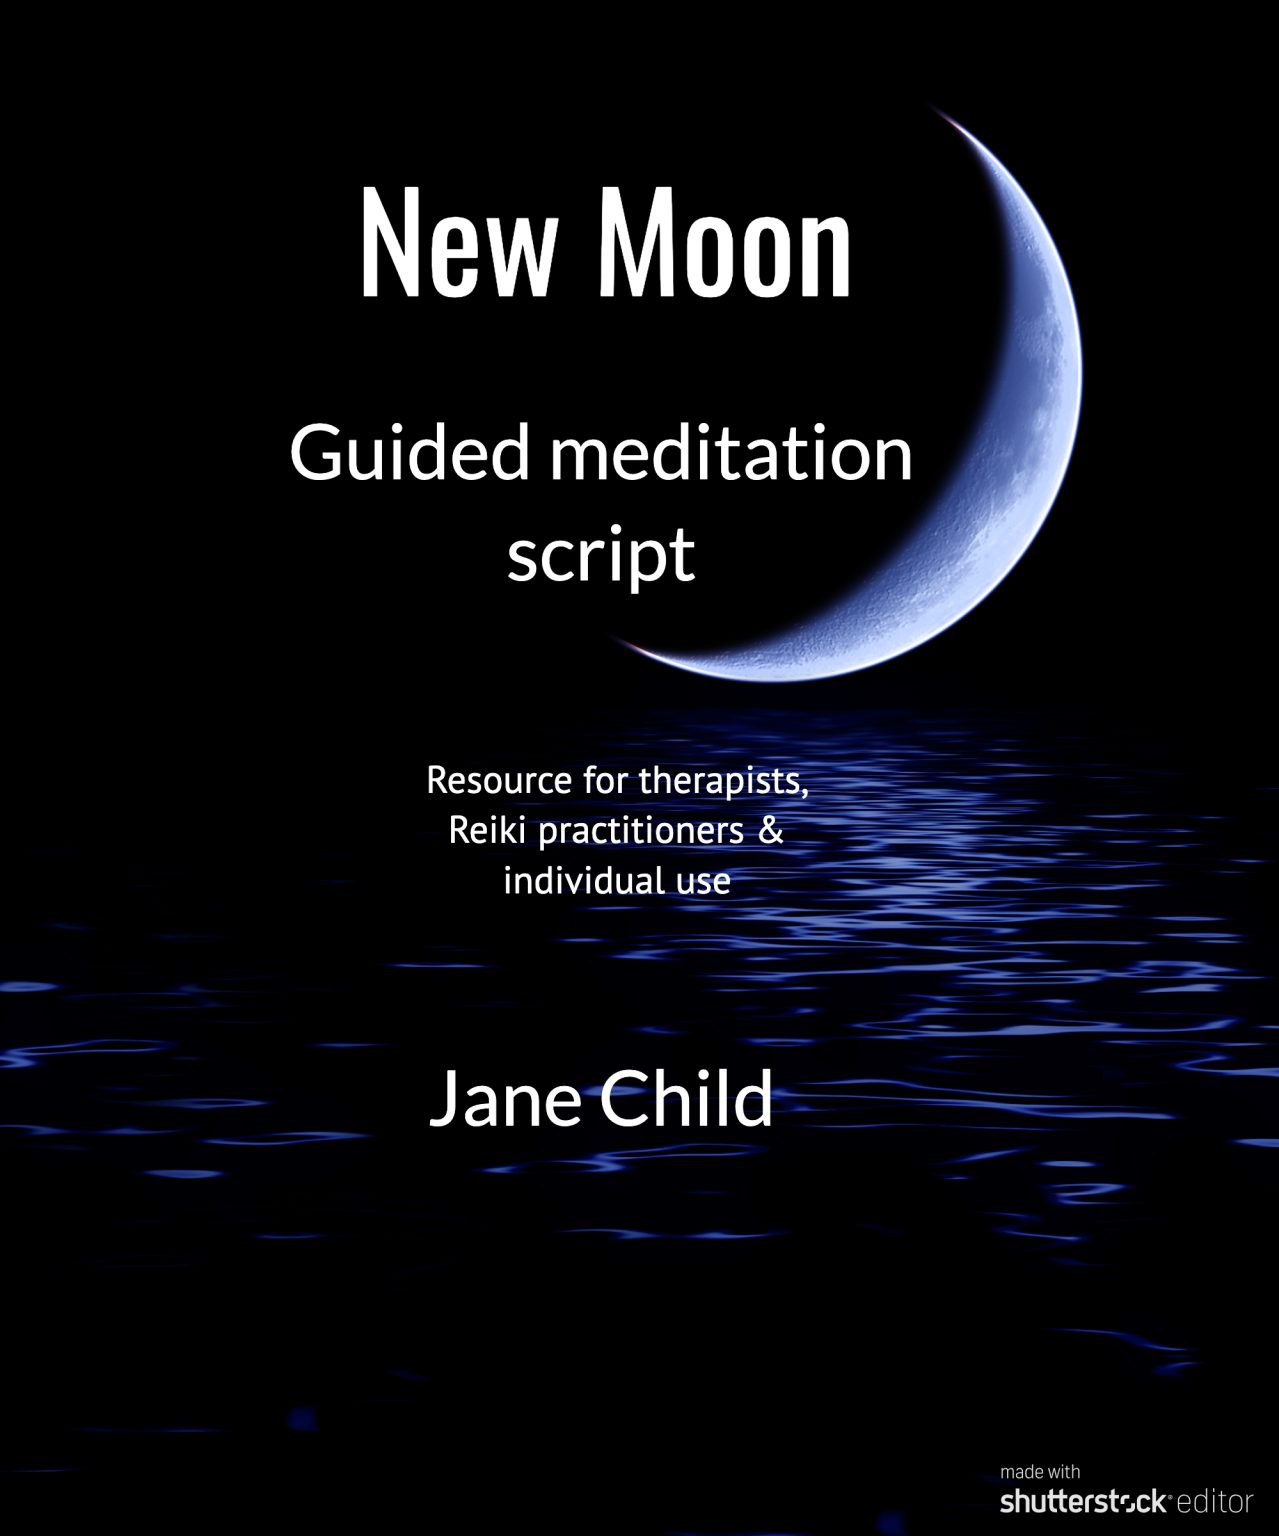 New Moon guided meditation script Reiki Jane